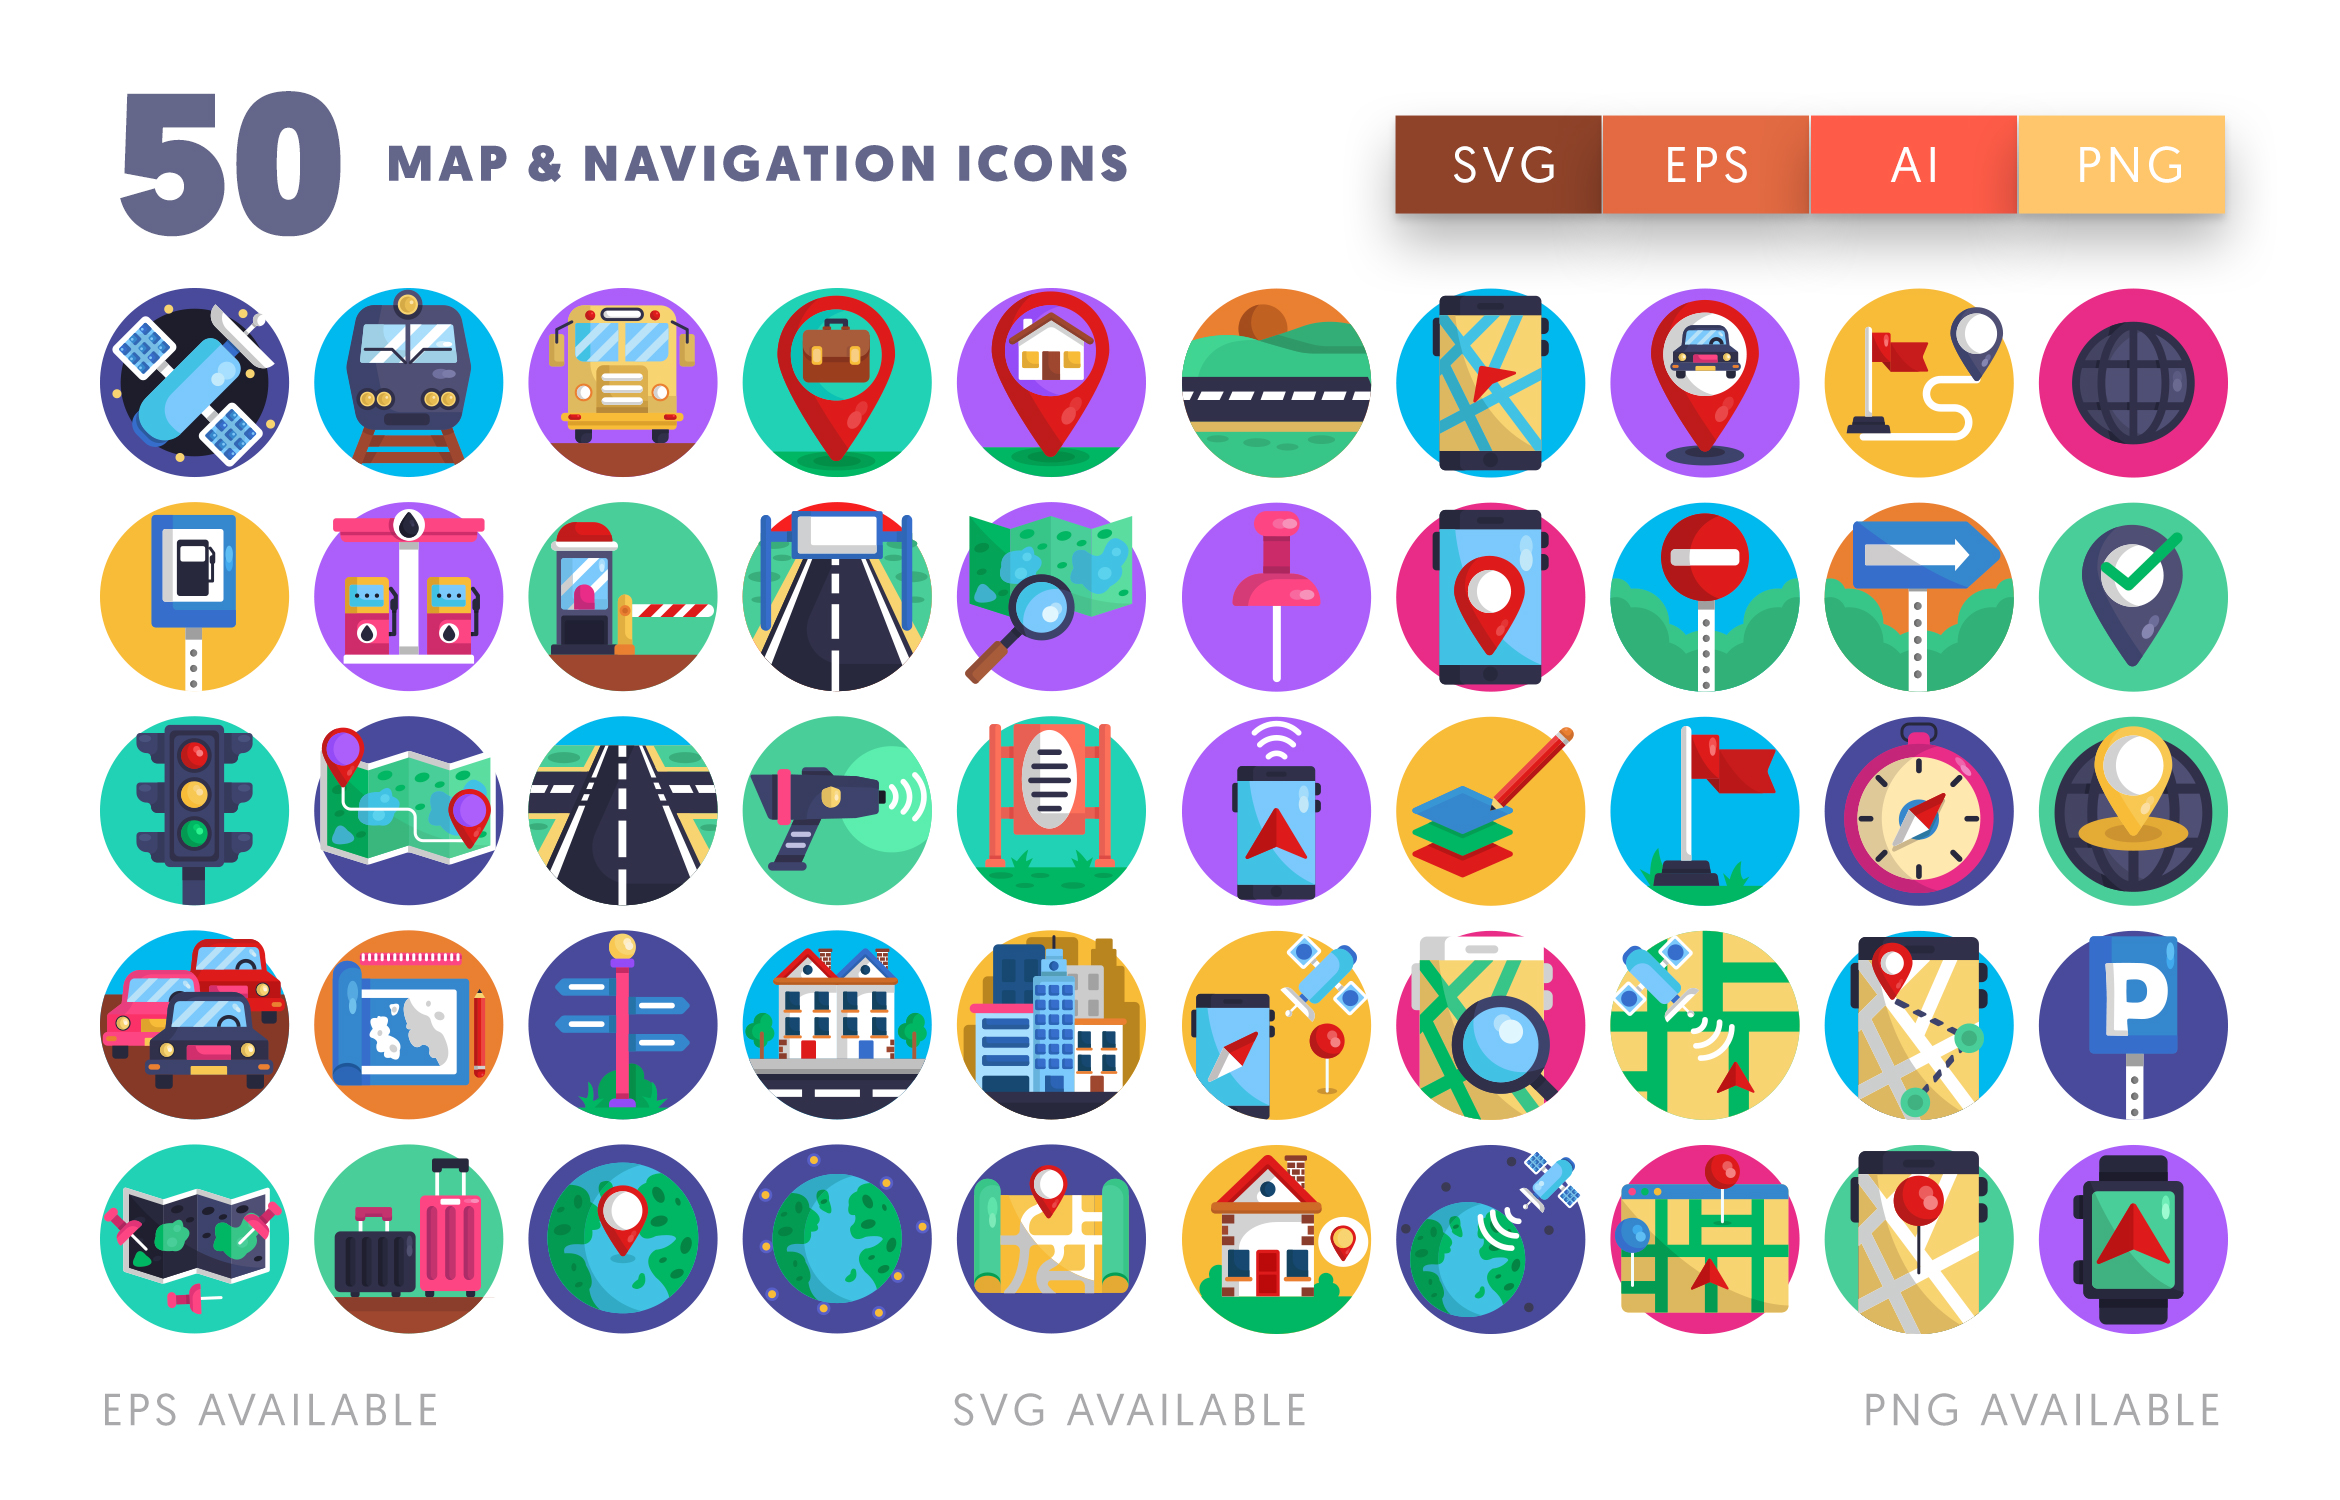 50 Map & Navigation Icons